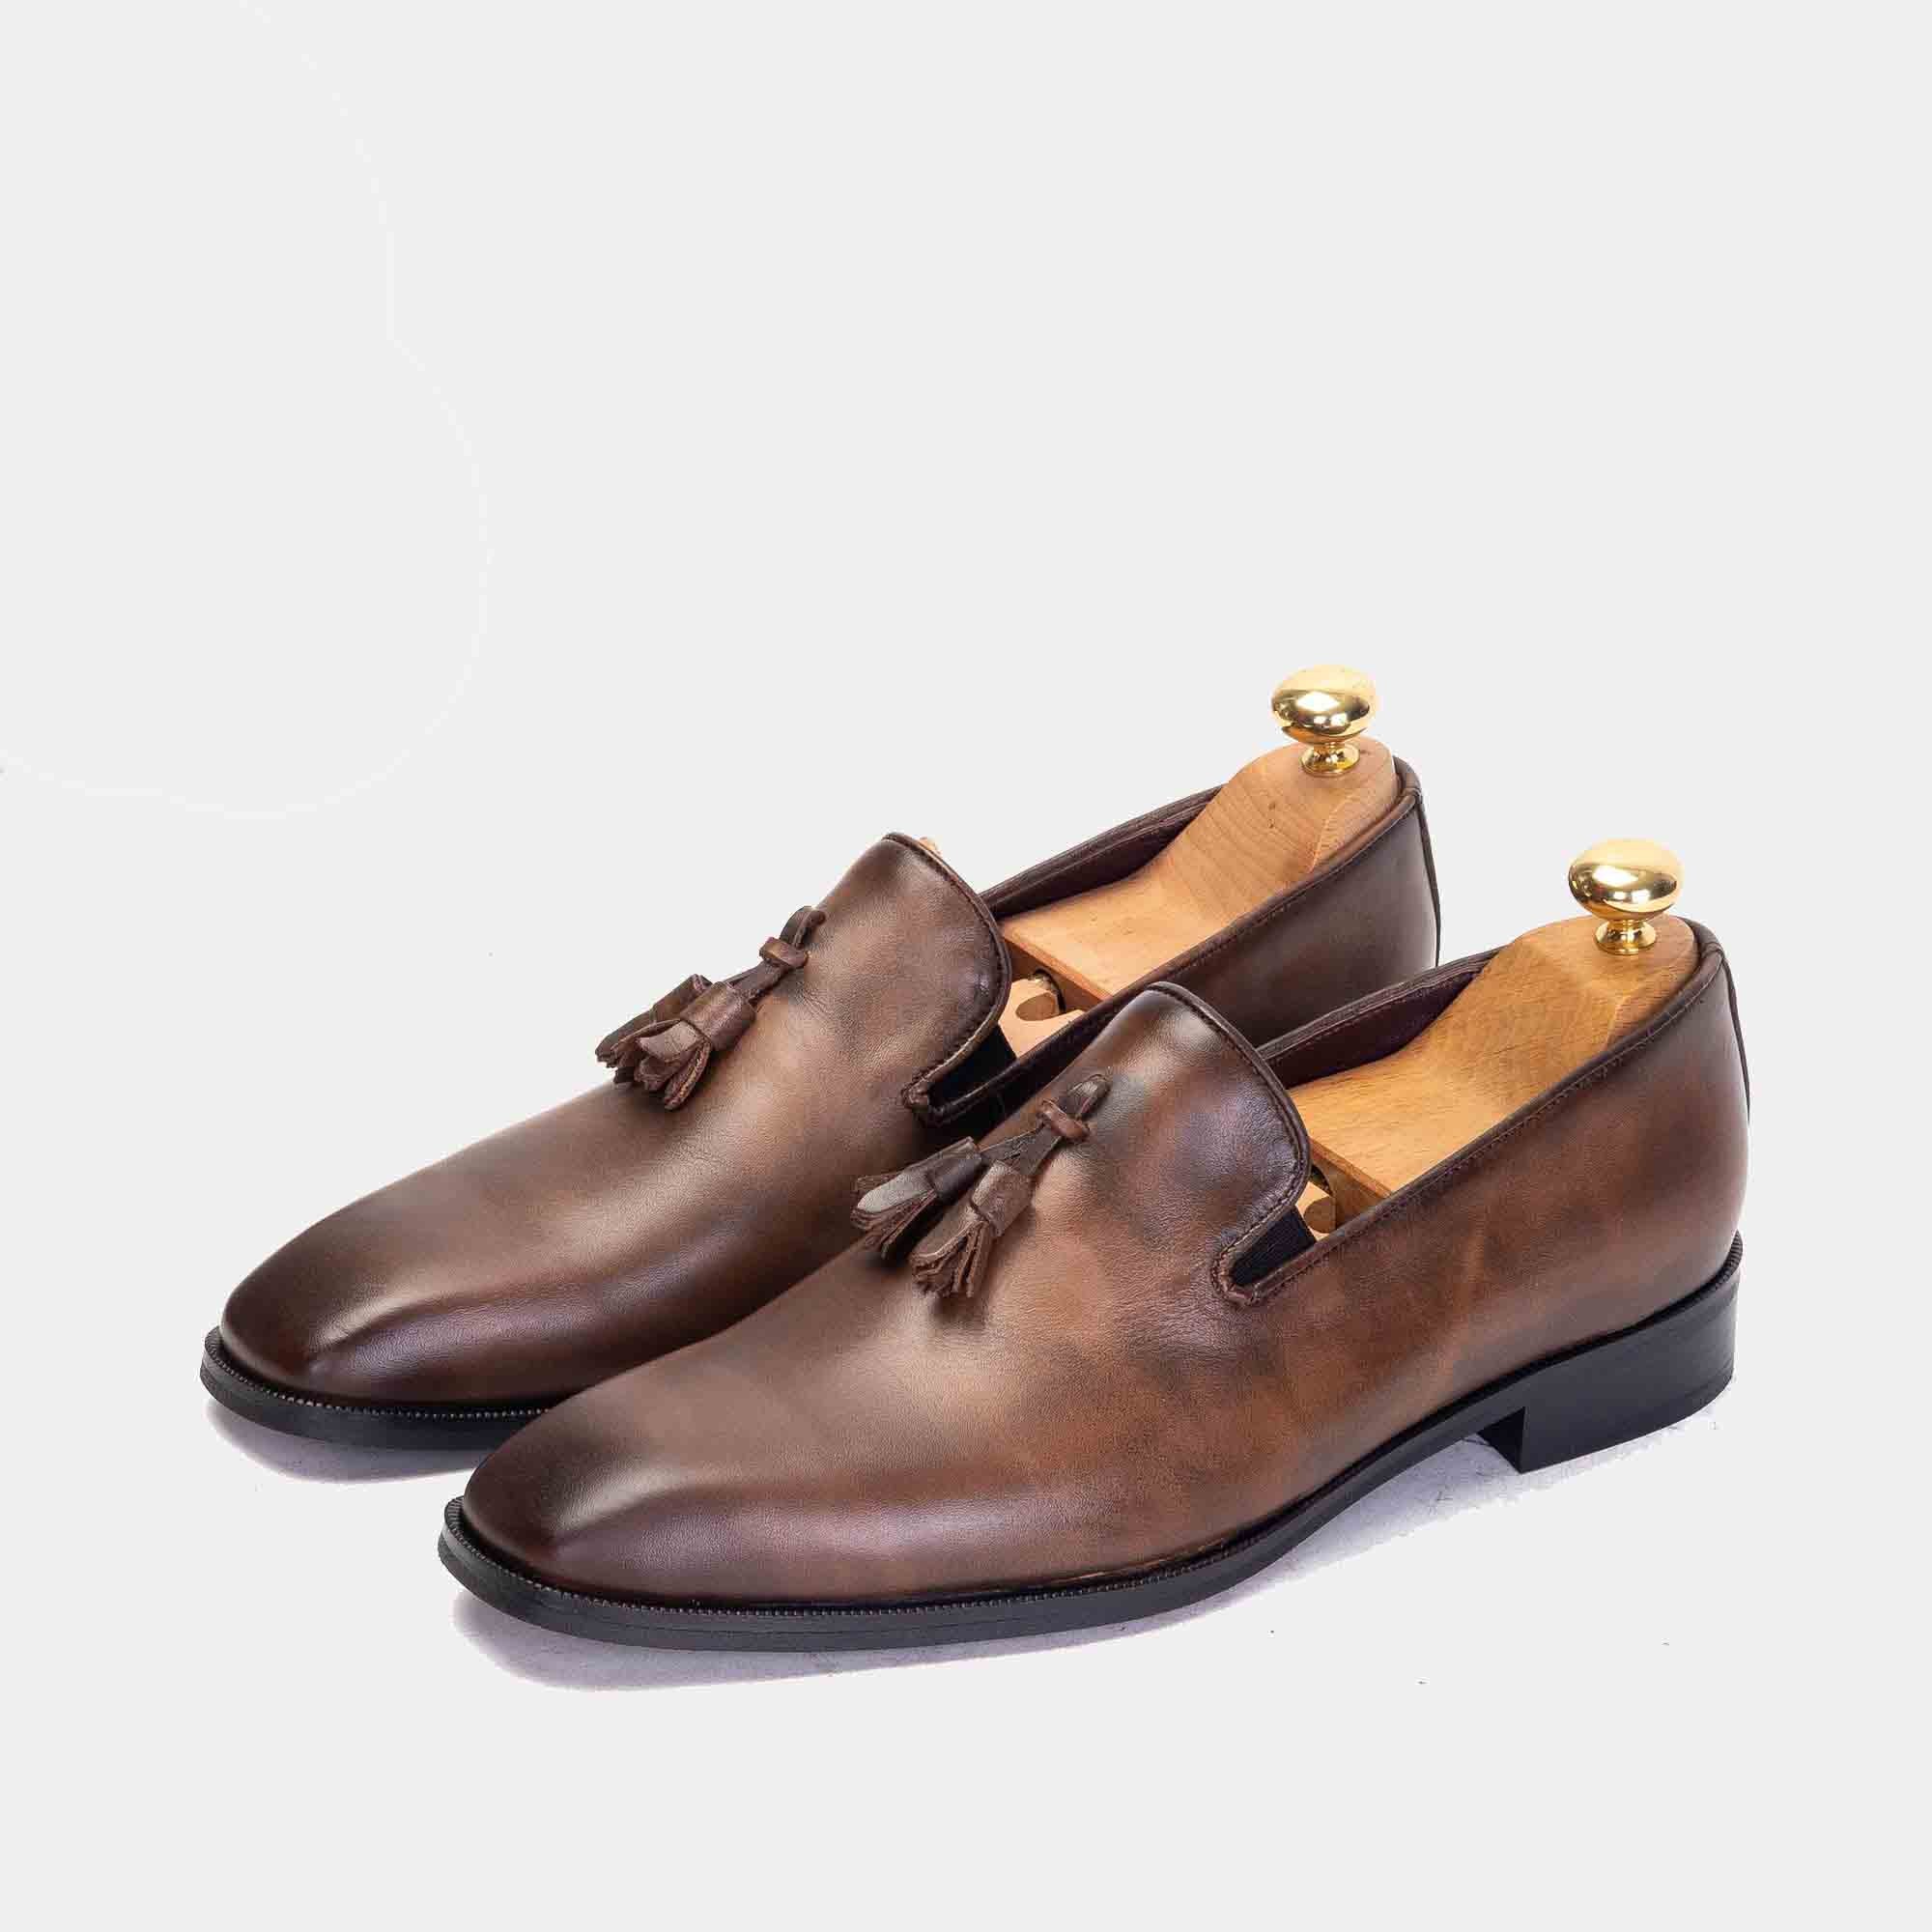 ''1302 Chaussure en cuir Marron vintage